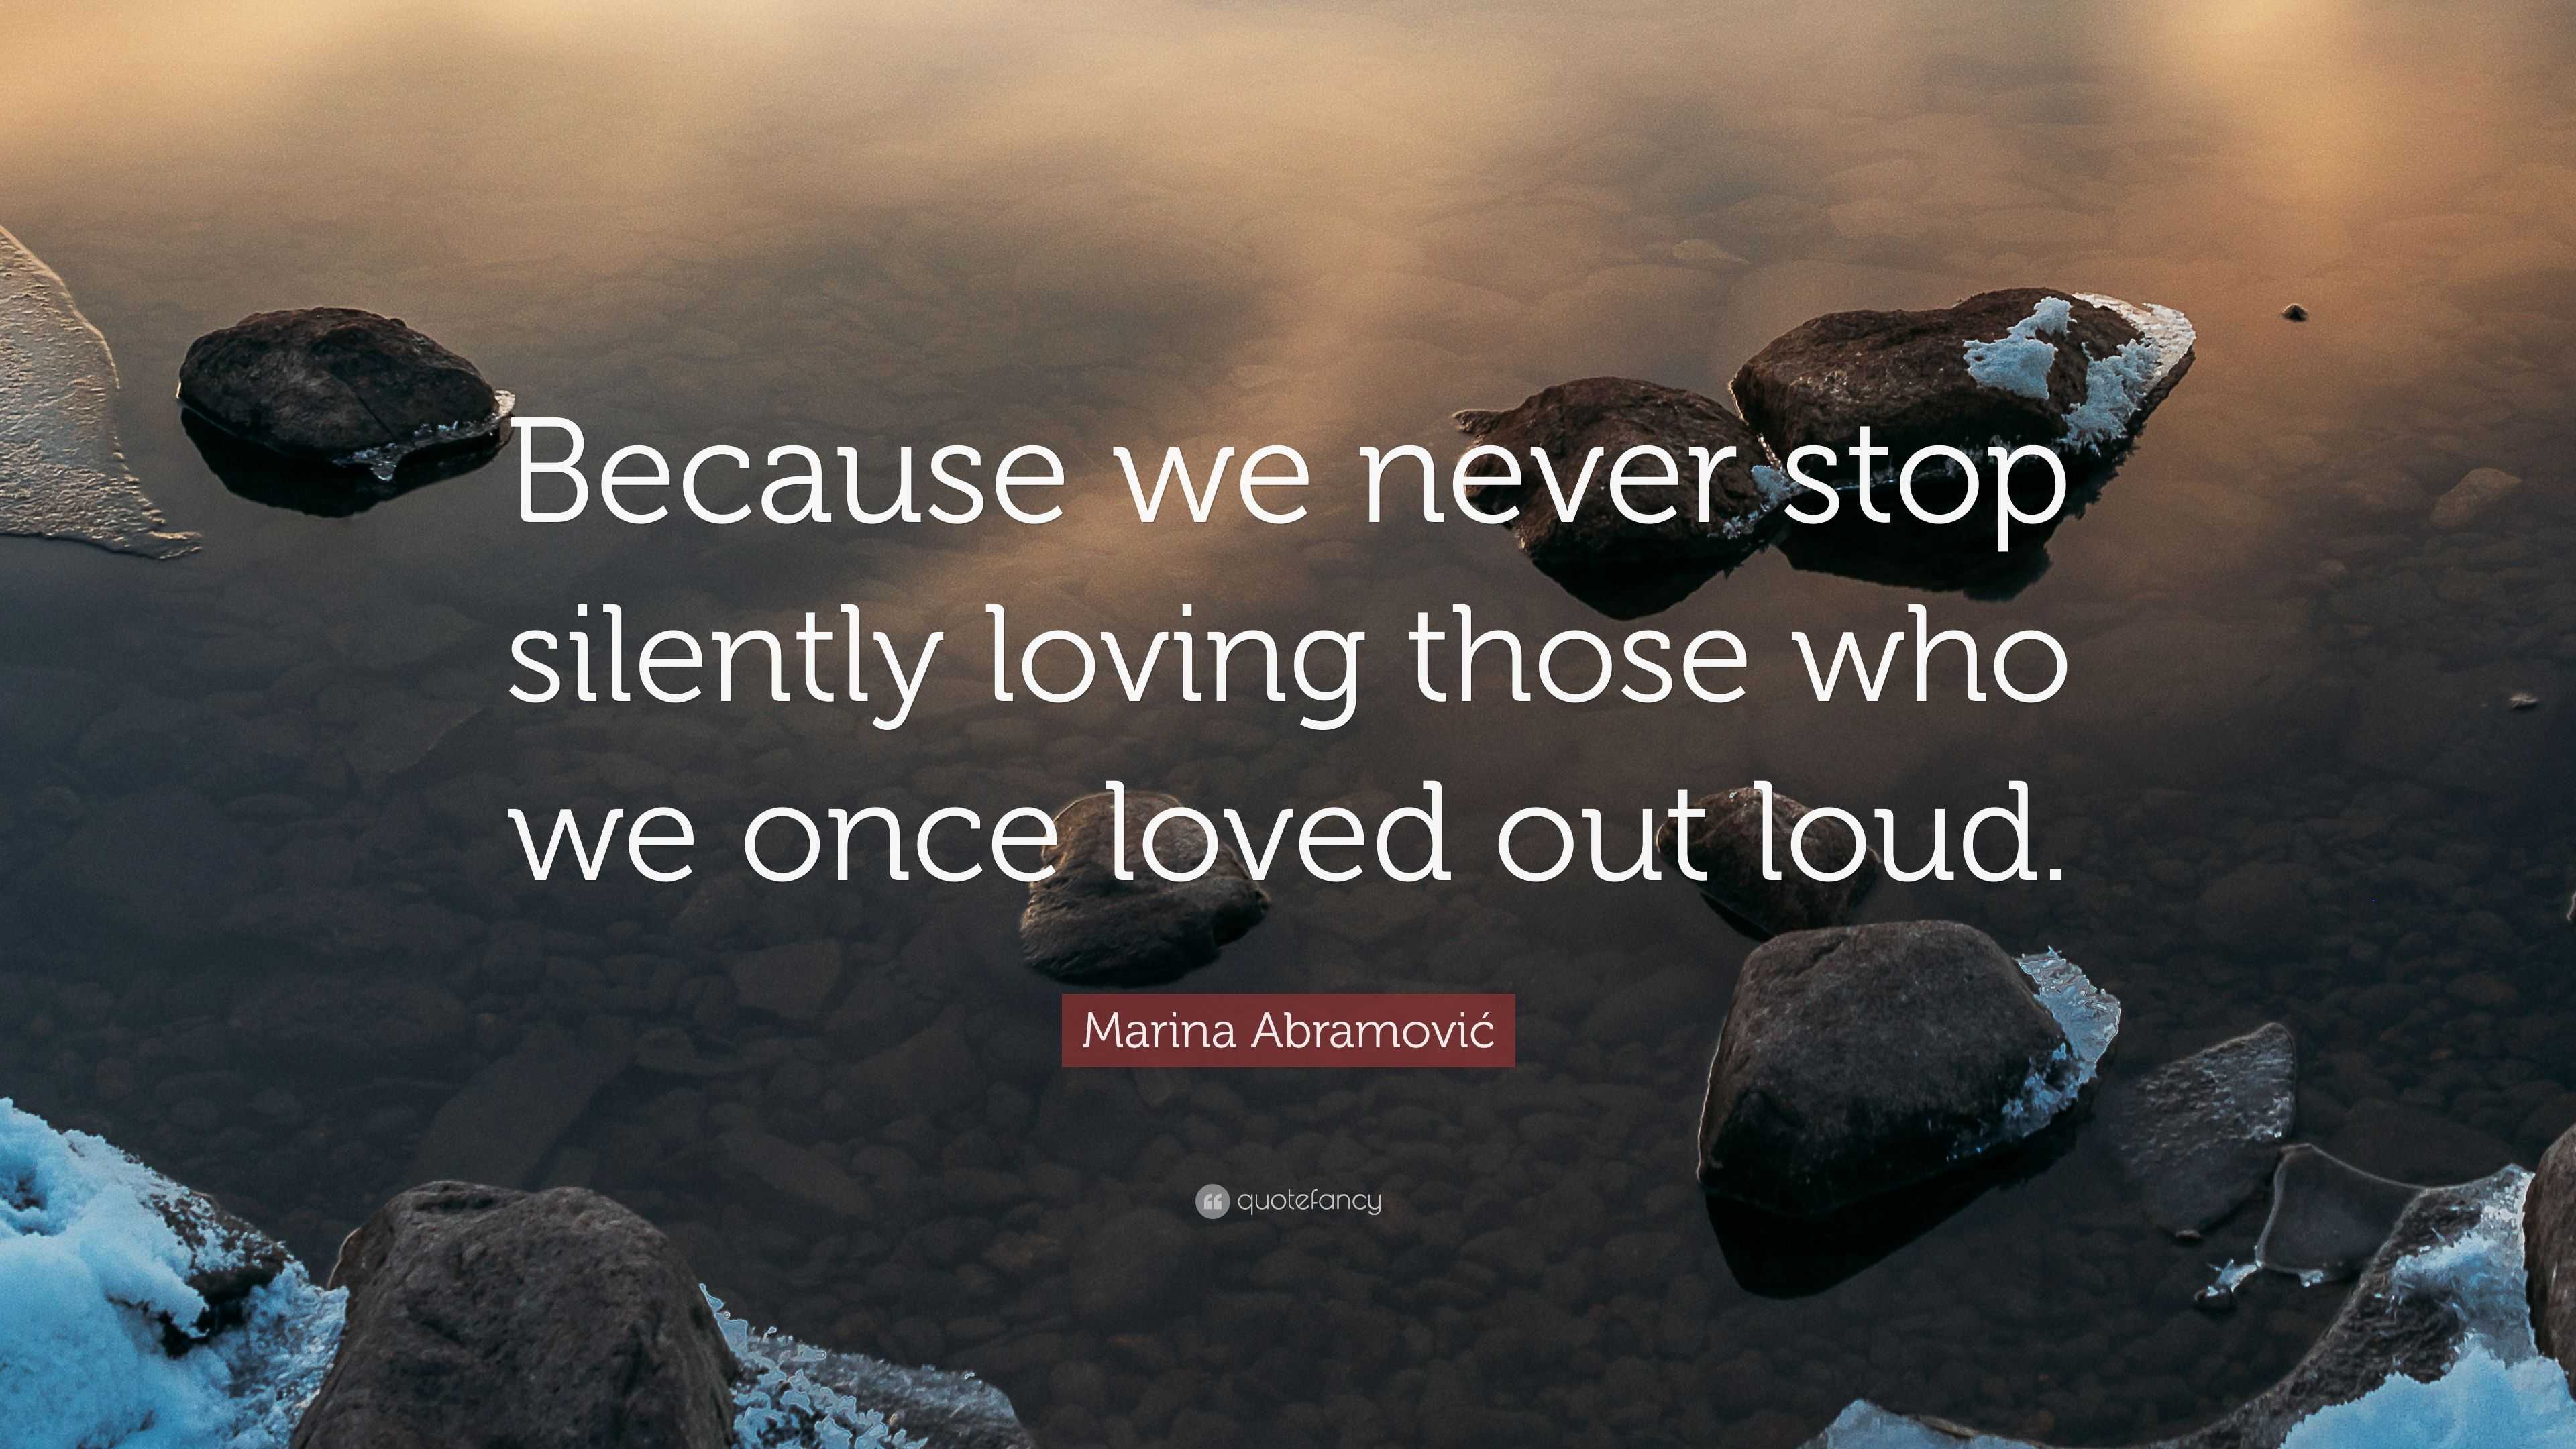 Marina Abramović Quote: “Because we never stop silently loving